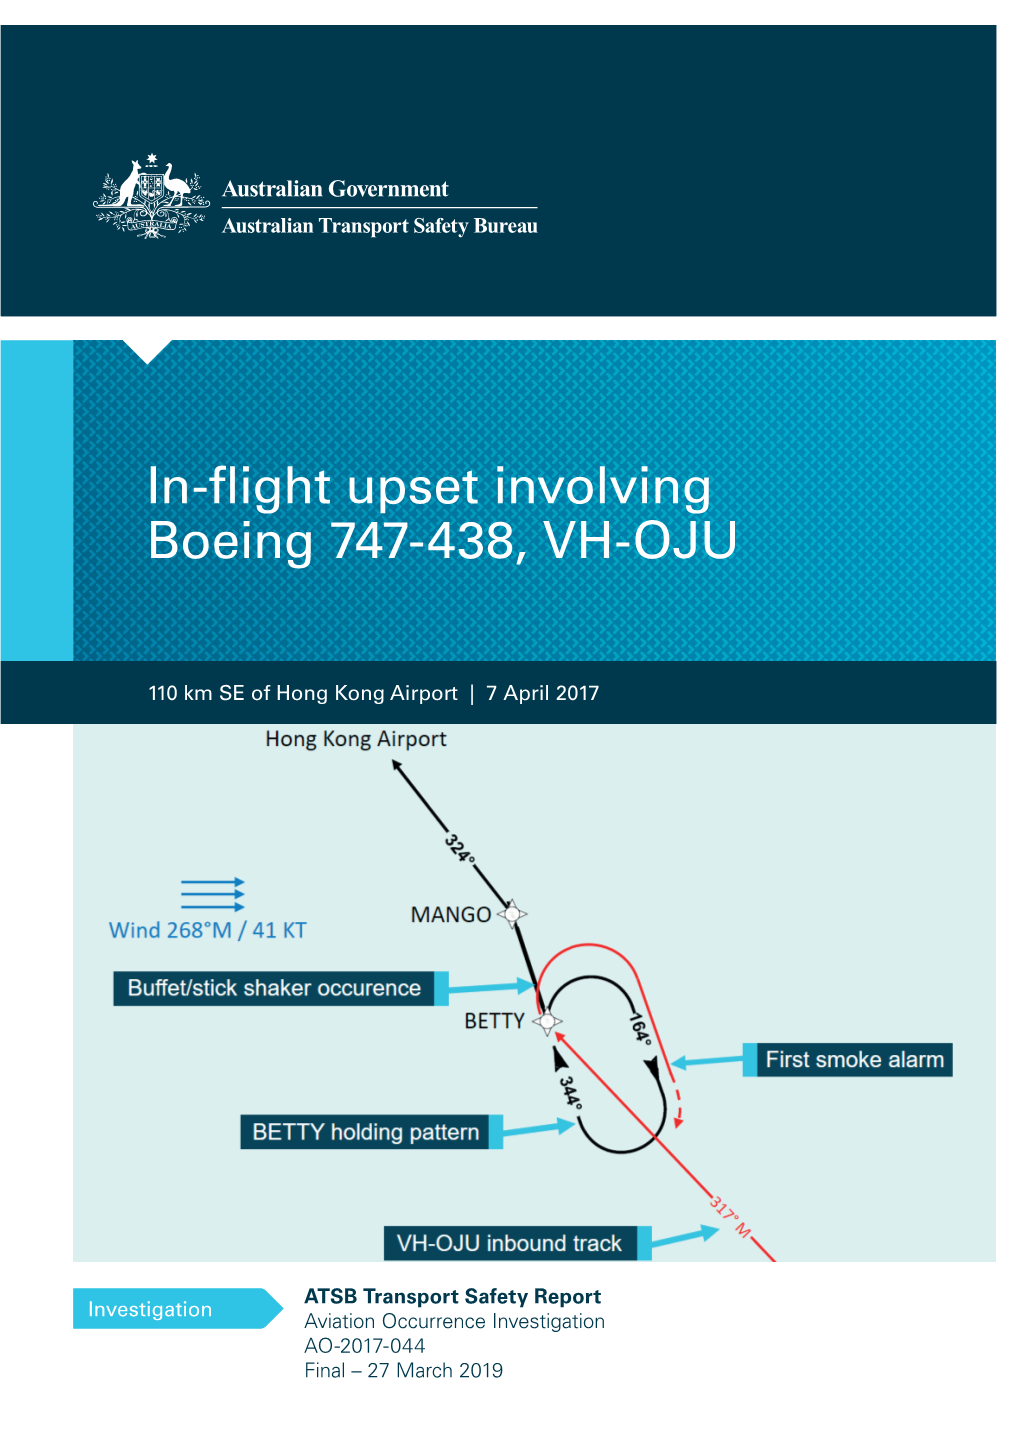 In-Flight Upset Involving Boeing 747-438, VH-OJU 110 Km SE of Hong Kong Airport, on 7 April 2017